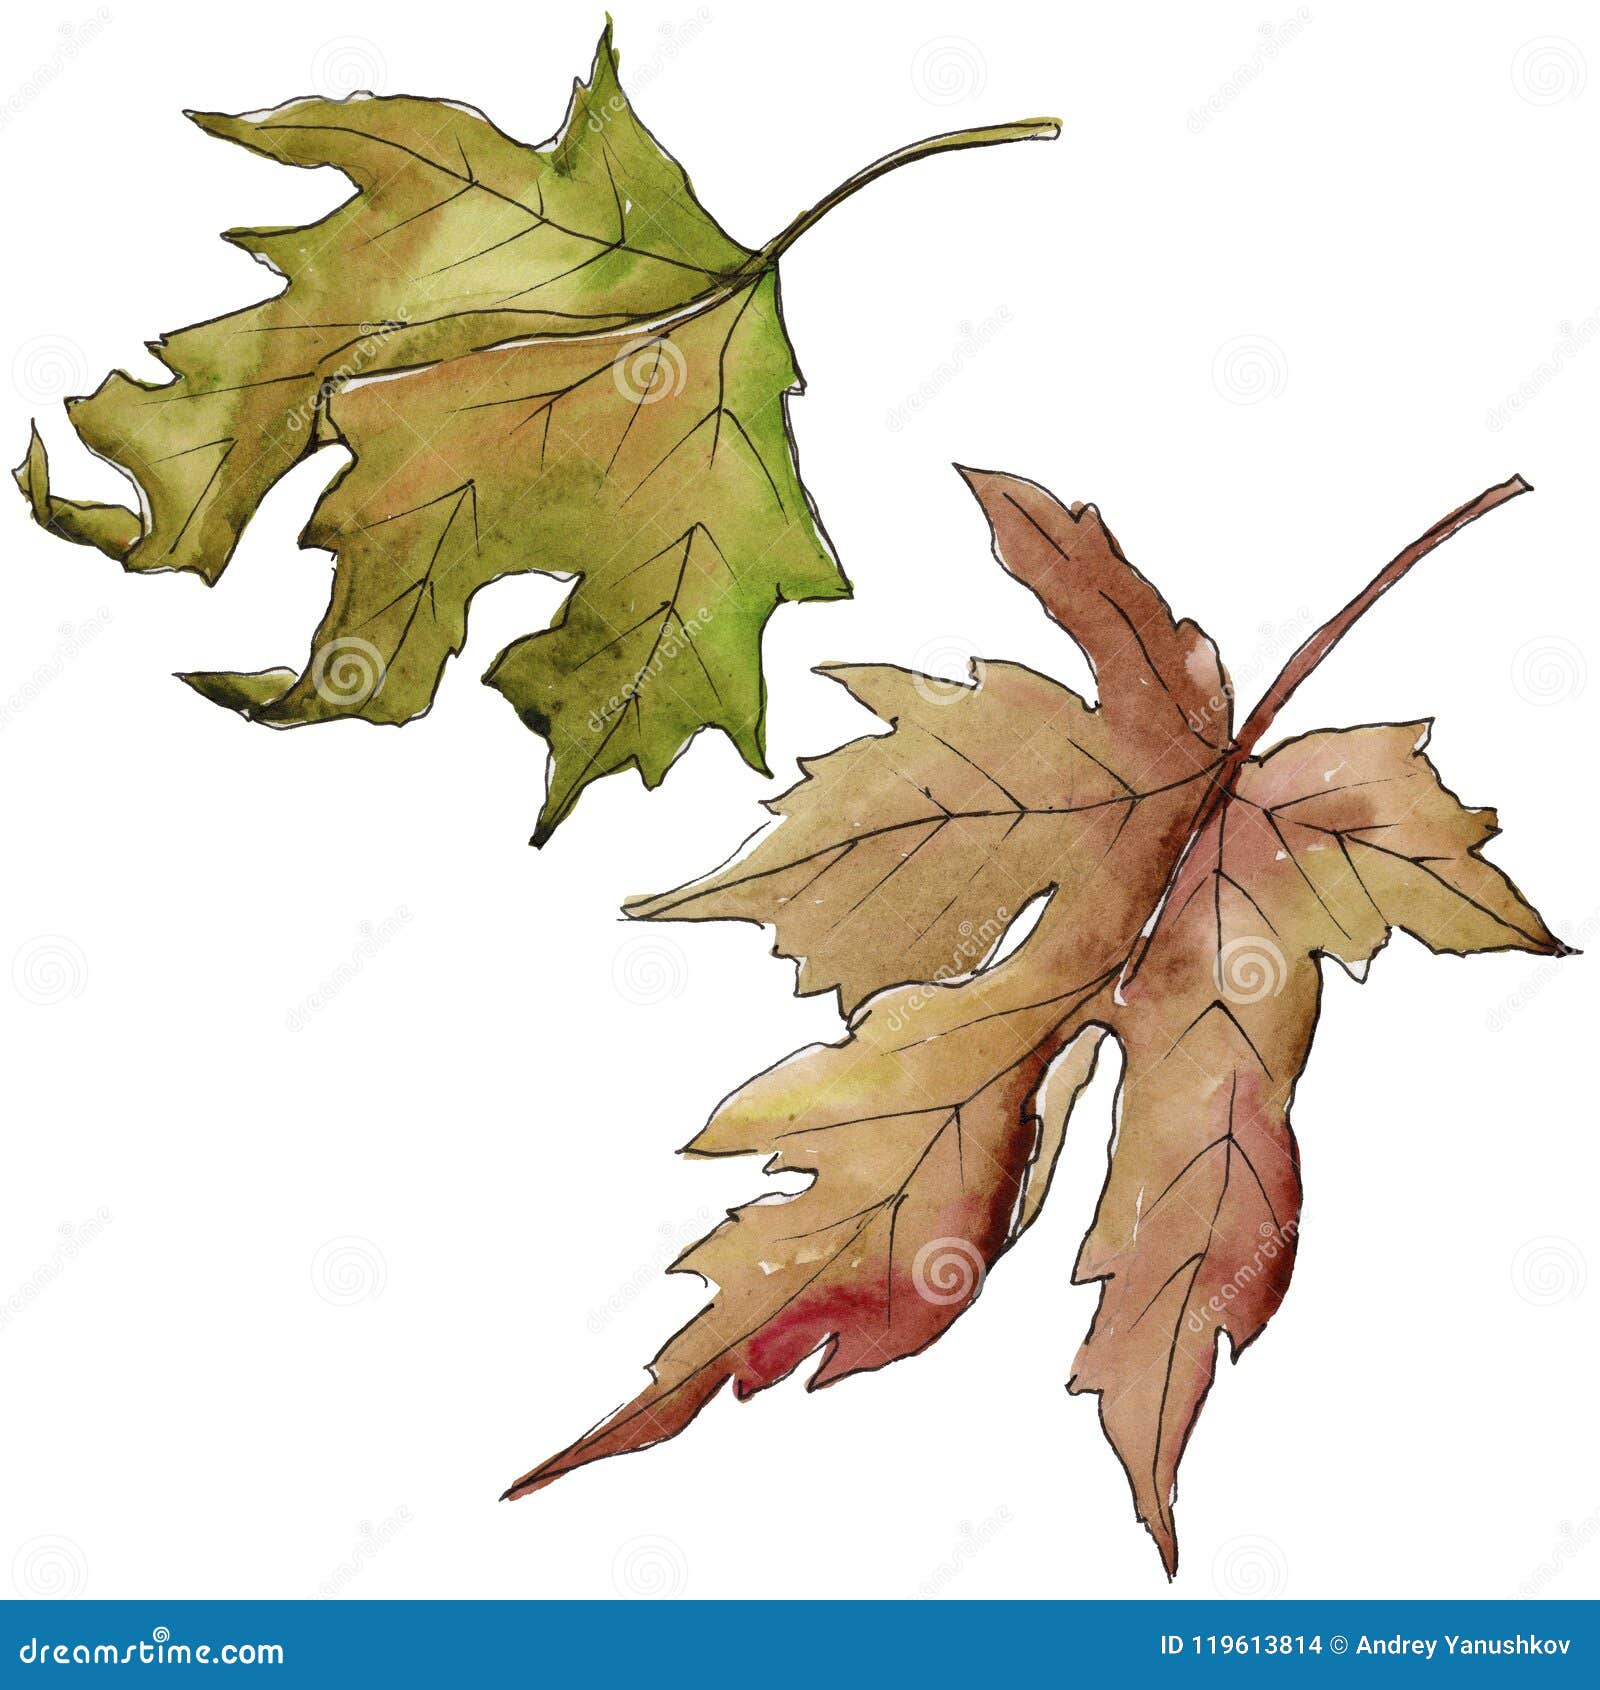 Autumn Leaves Botanical Red Maple Leaves Illustration 